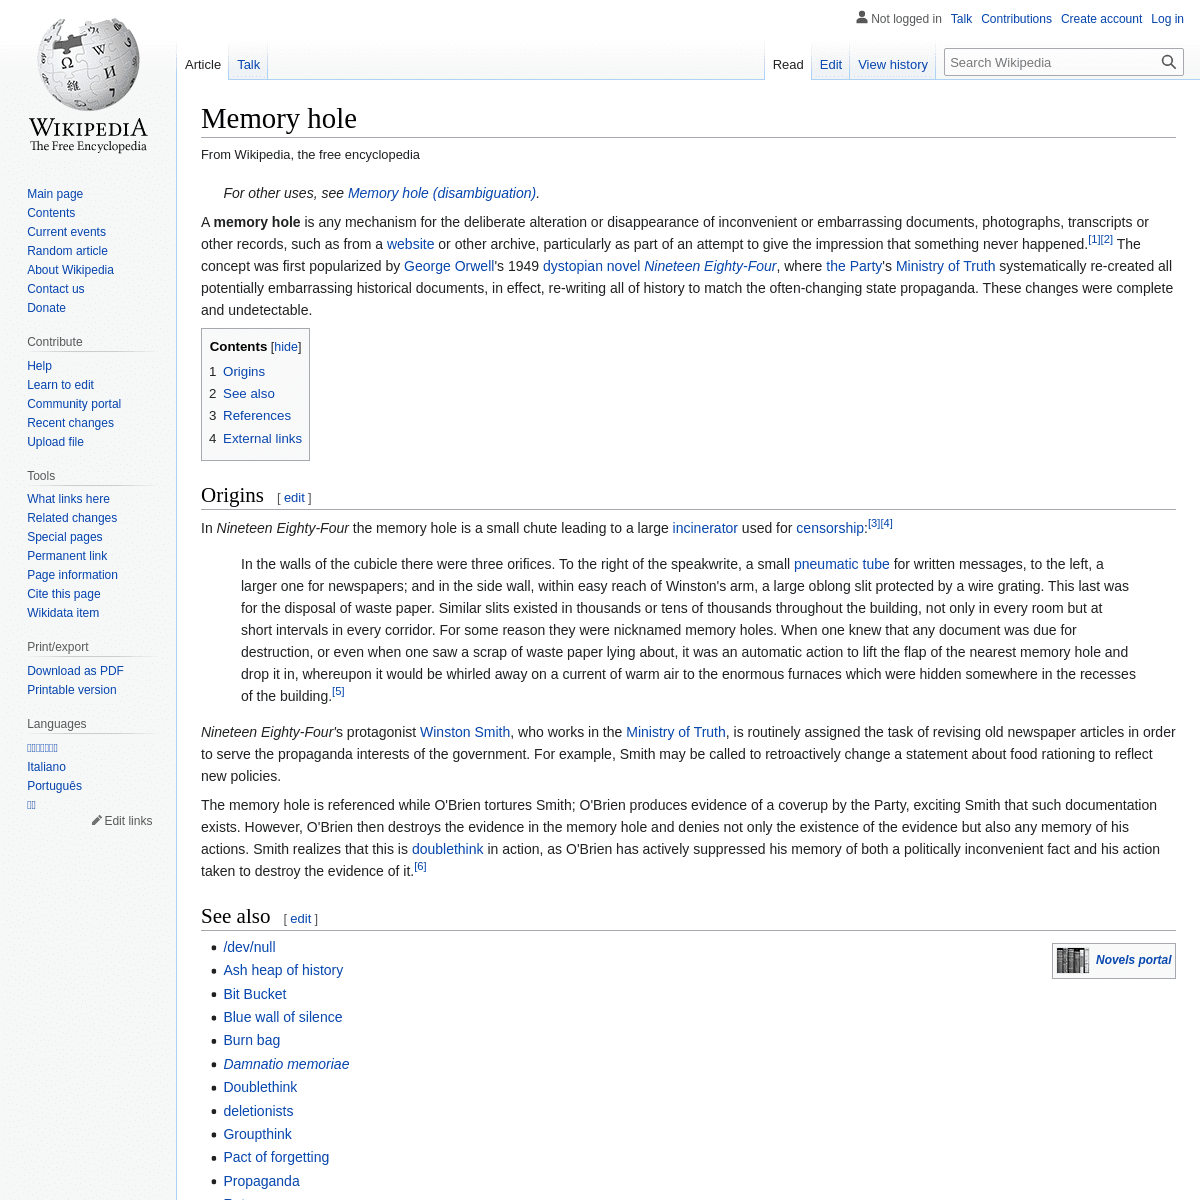 A complete backup of https://en.wikipedia.org/wiki/Memory_hole